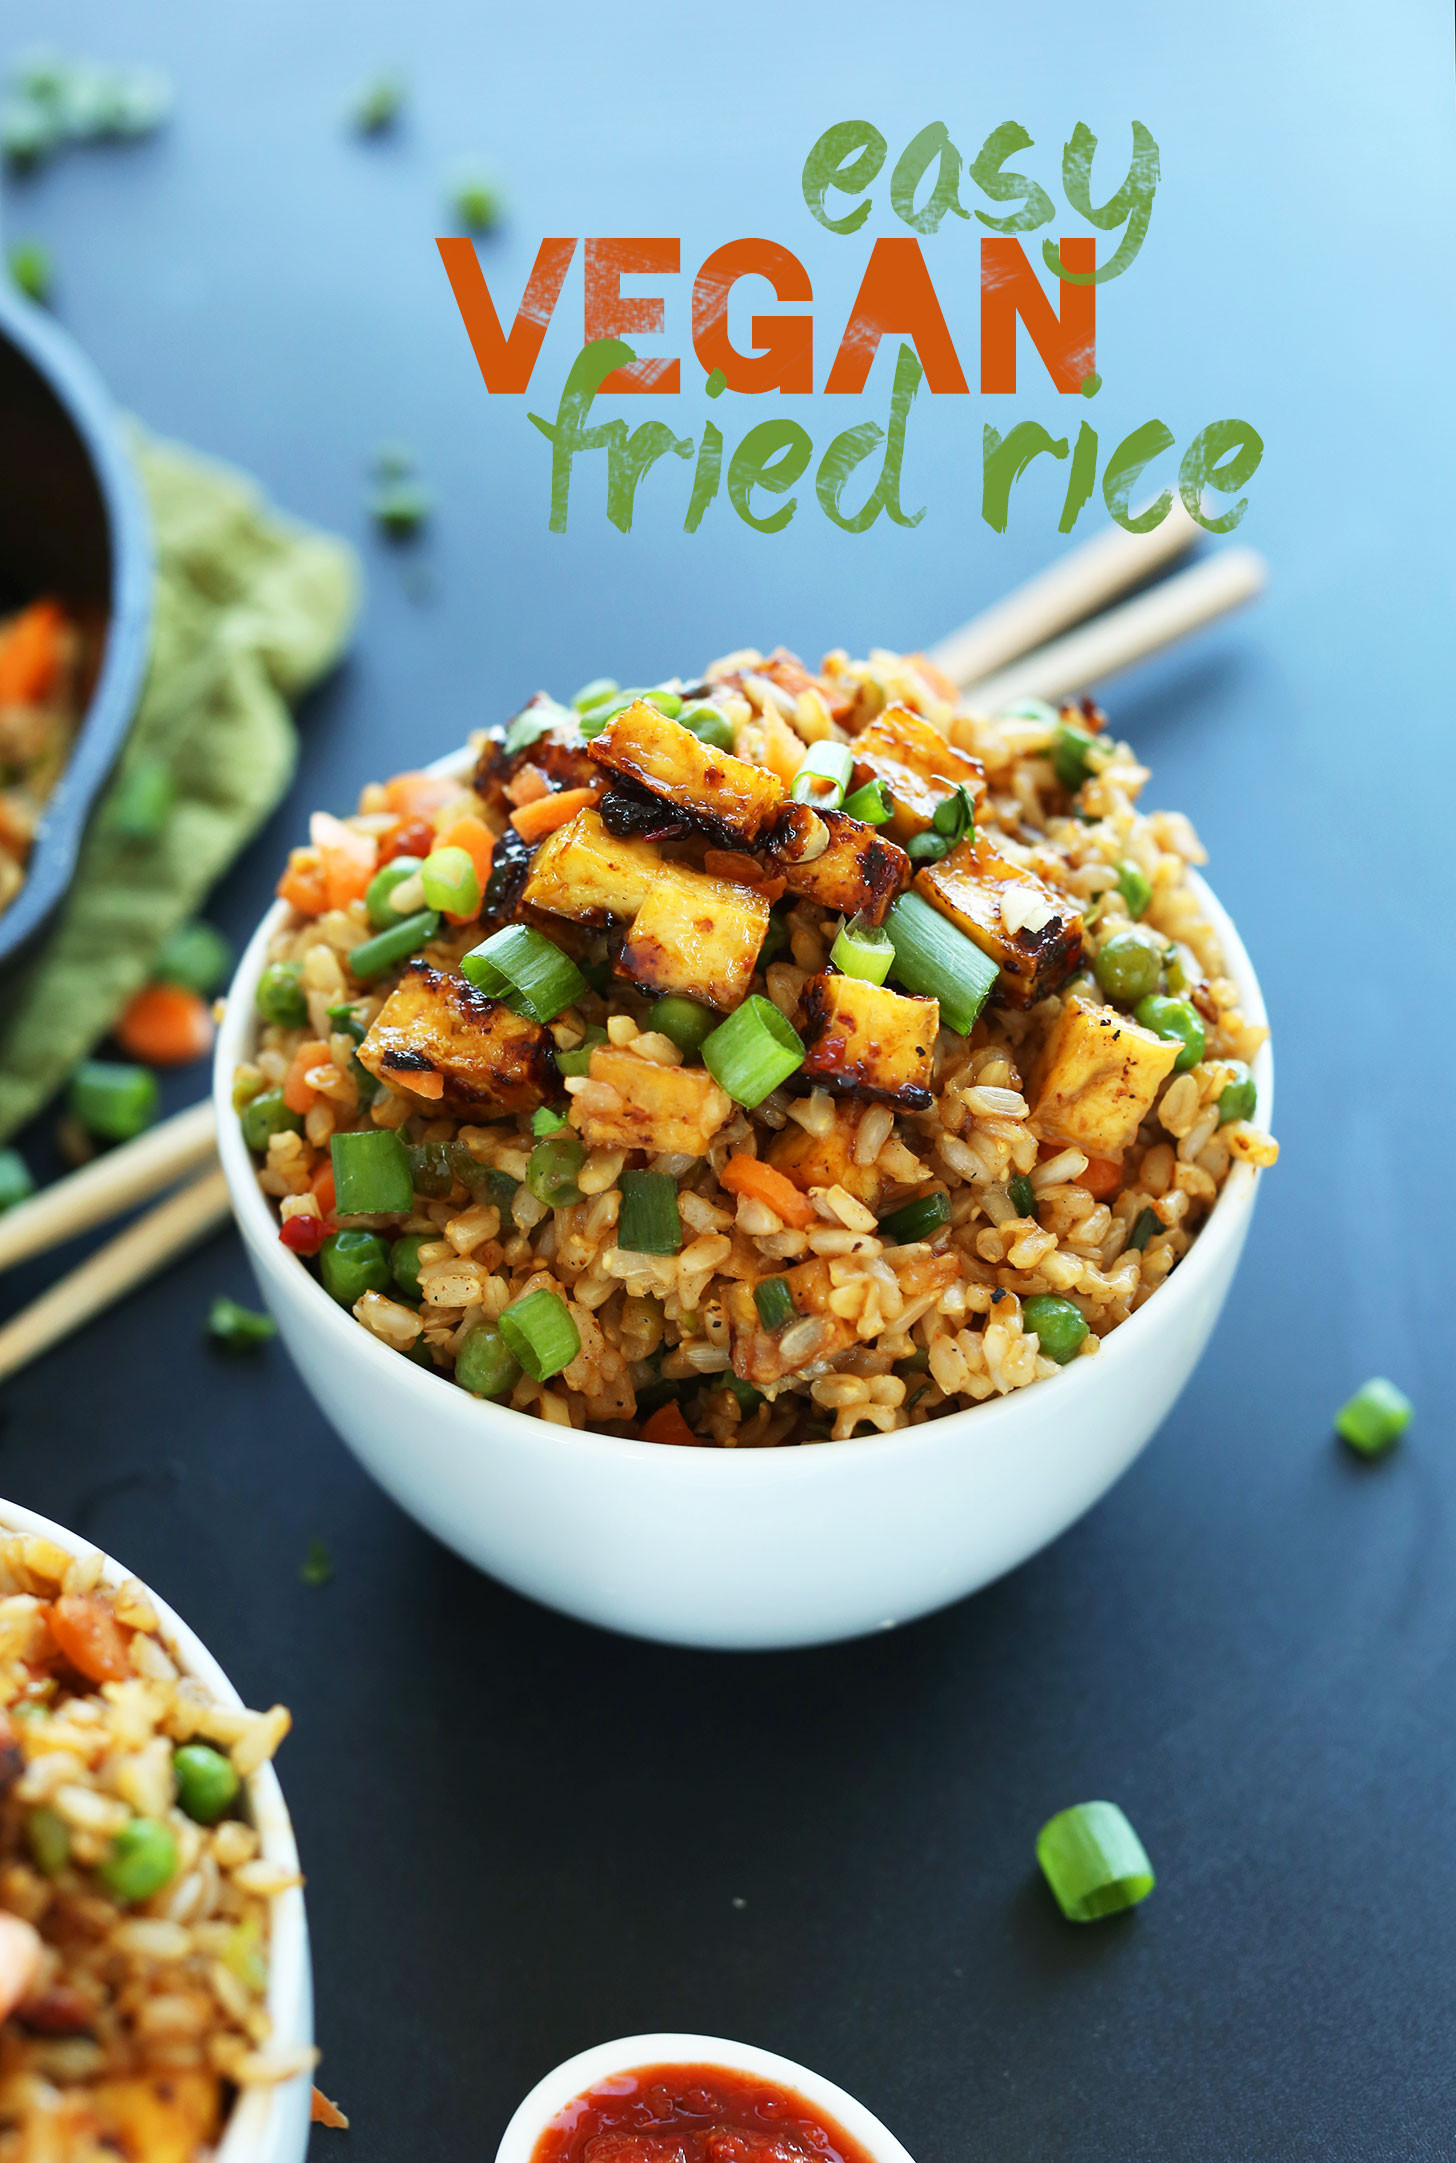 Vegan Recipes Tofu
 Vegan Fried Rice